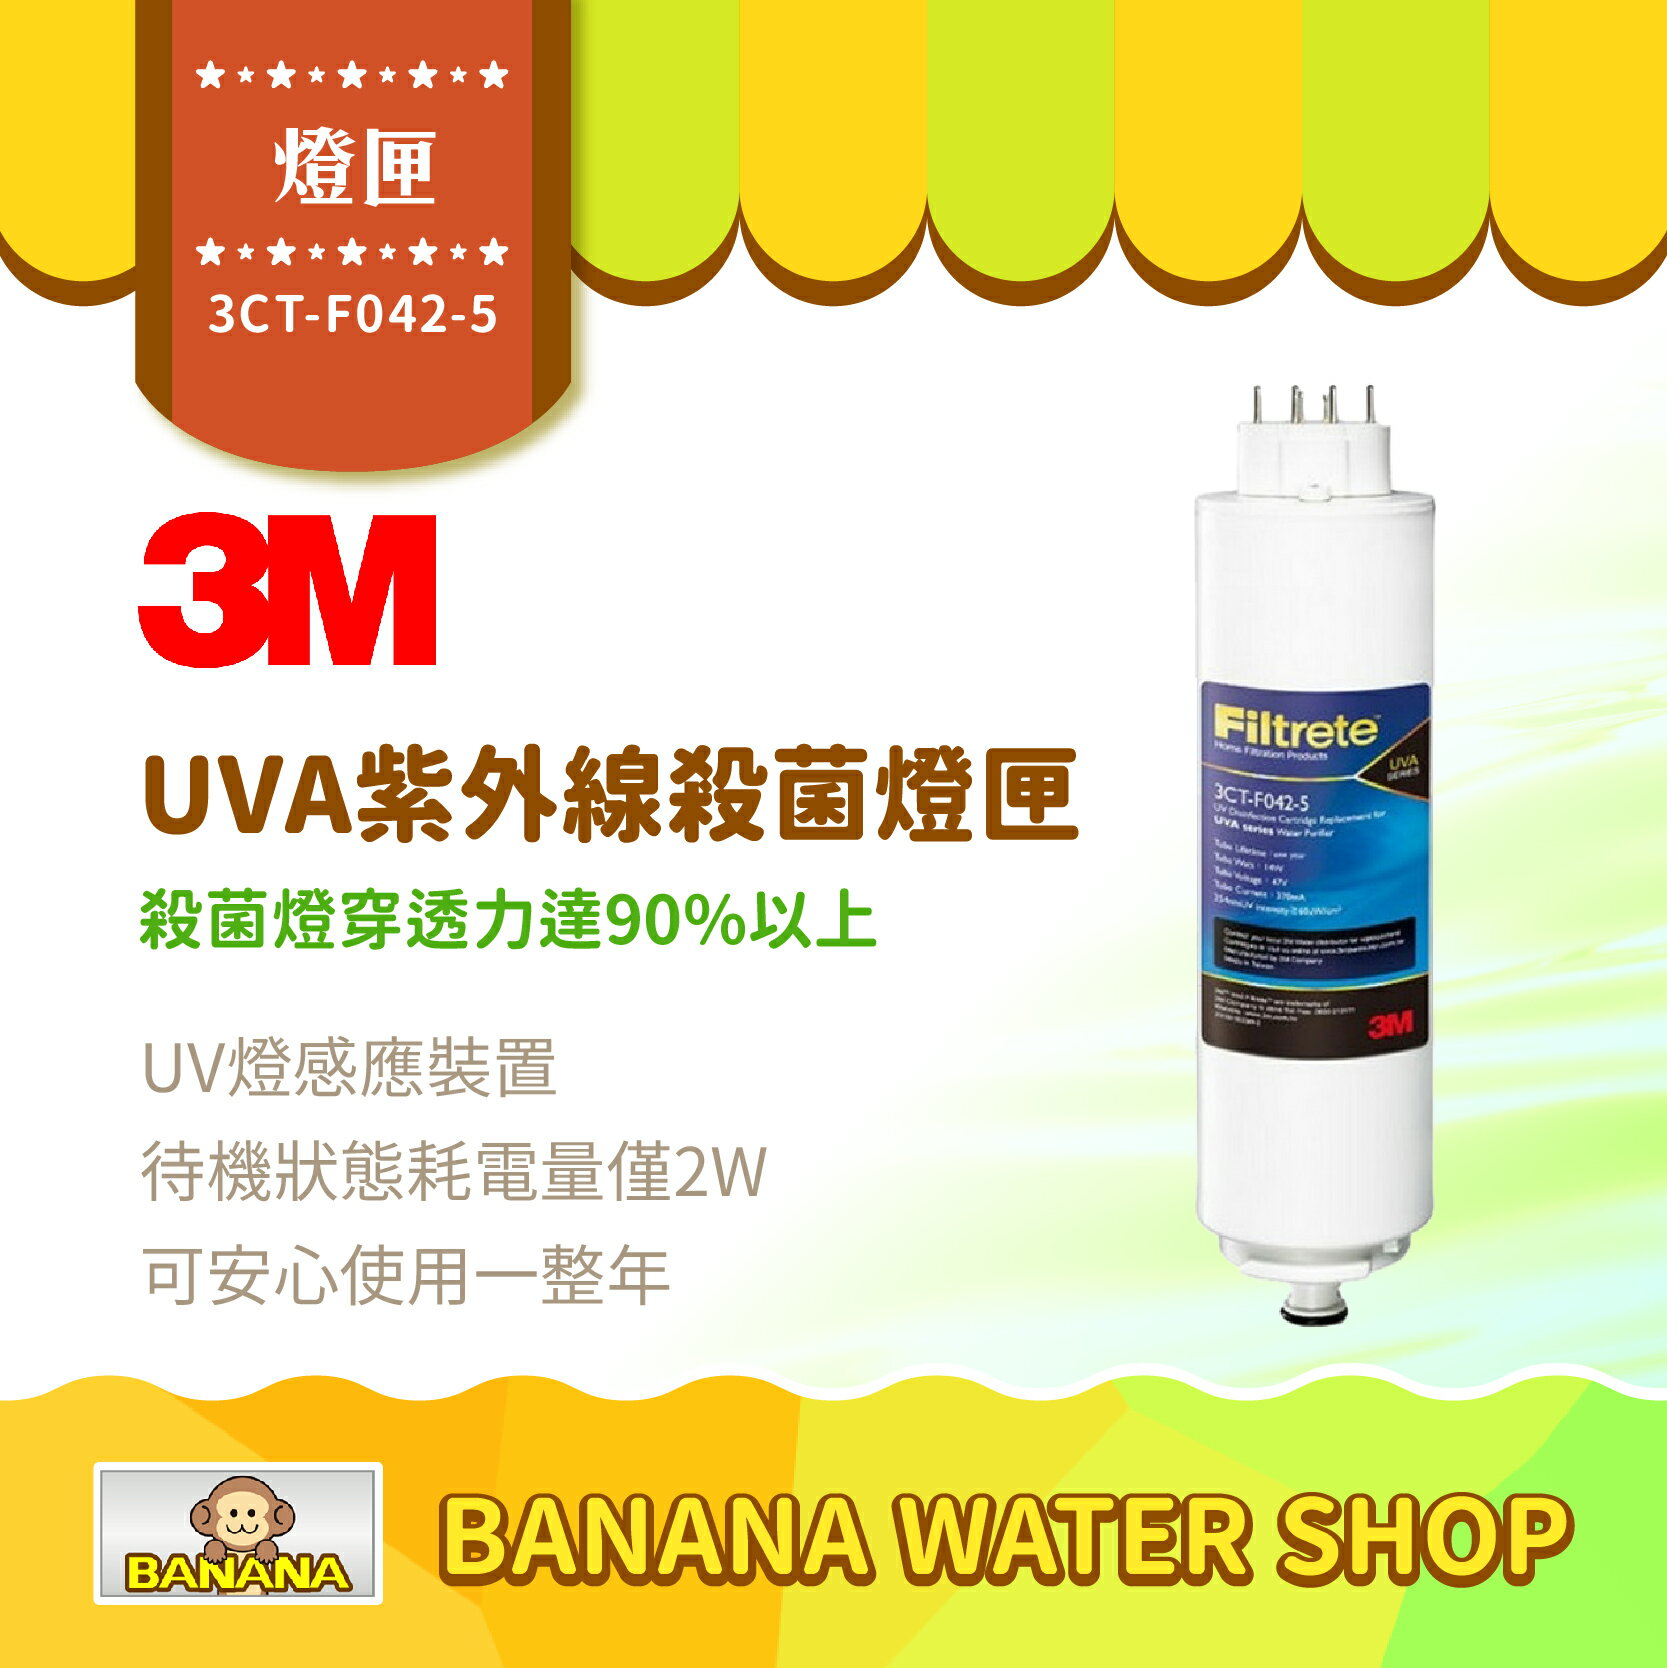 【3M】3CT-F042-5 UVA紫外線殺菌燈匣 UVA3000 UVA2000 通用3CT-F022-5【零利率】